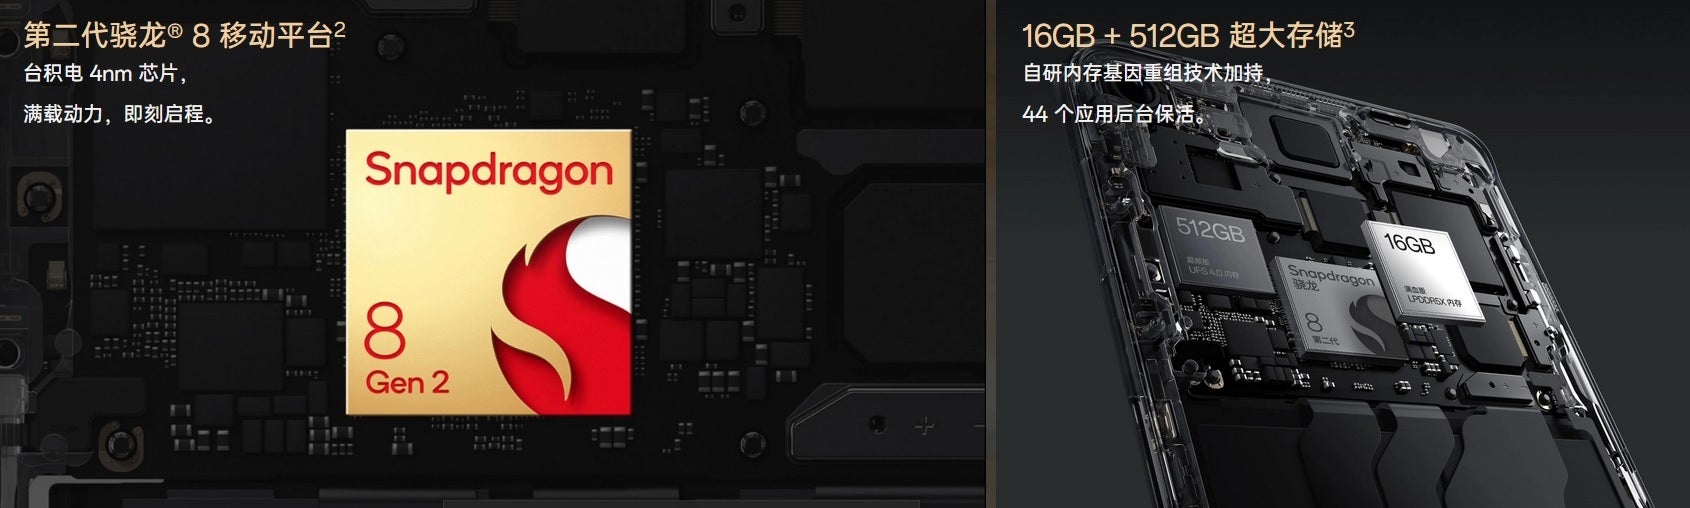 OnePlus 11 Jupiter Rock release - 16GB + 512GB version, priced at